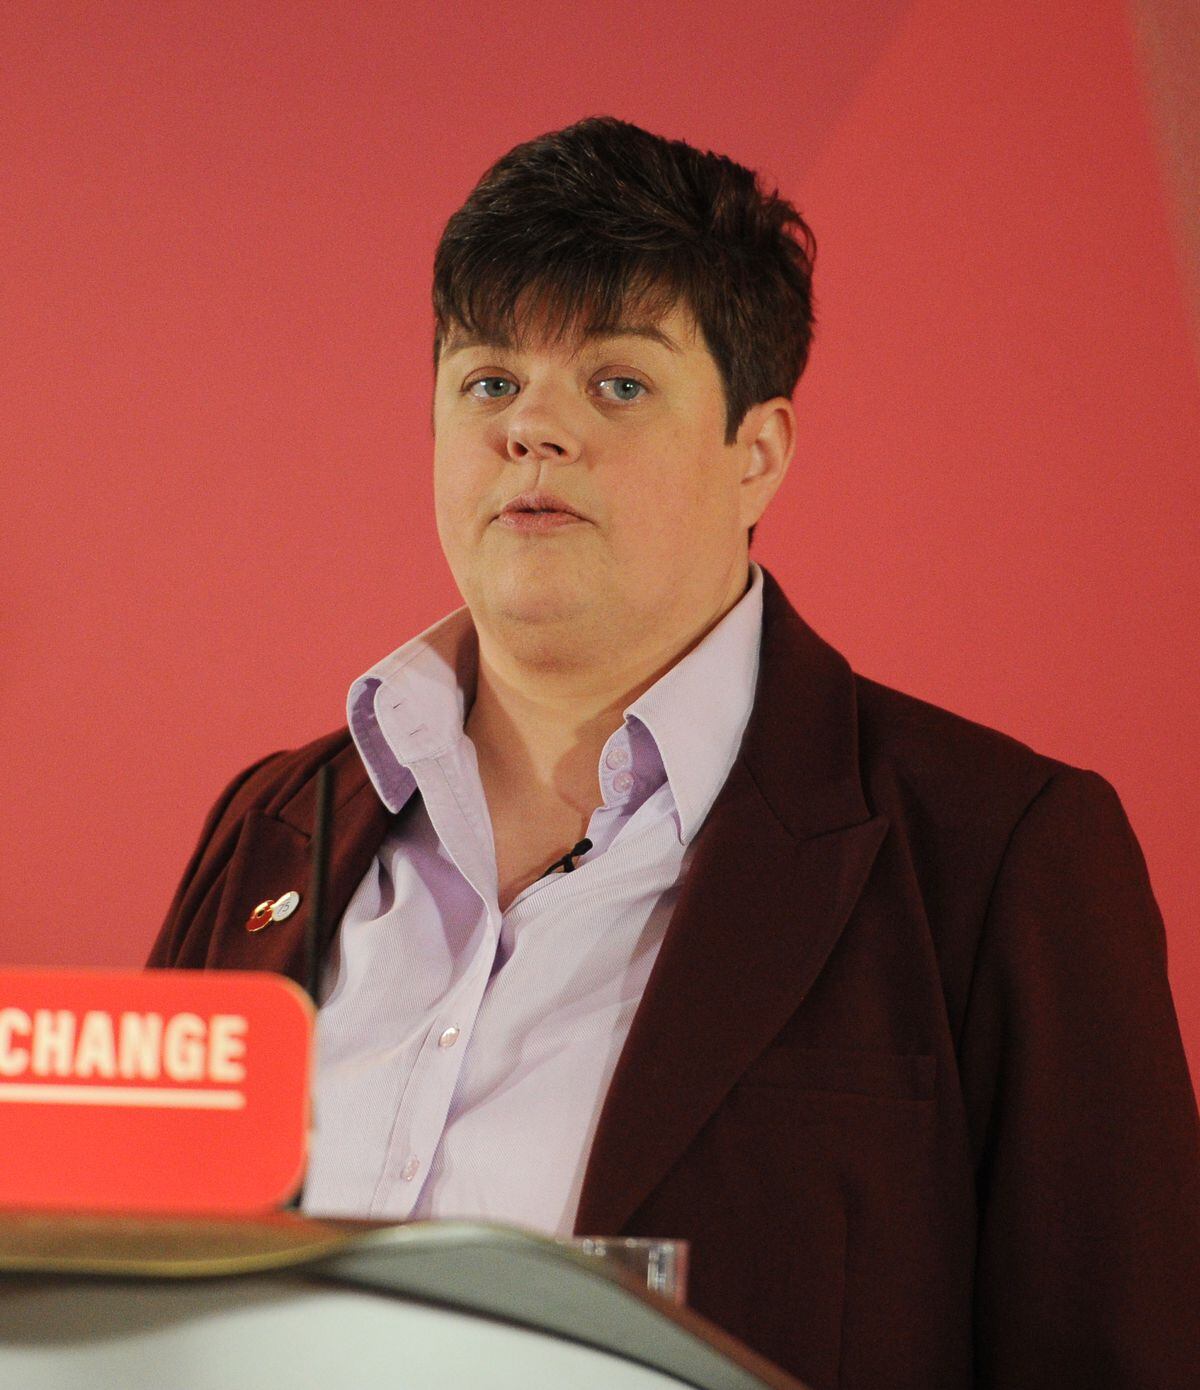 Labour's Telford election candidate Katrina Gilman